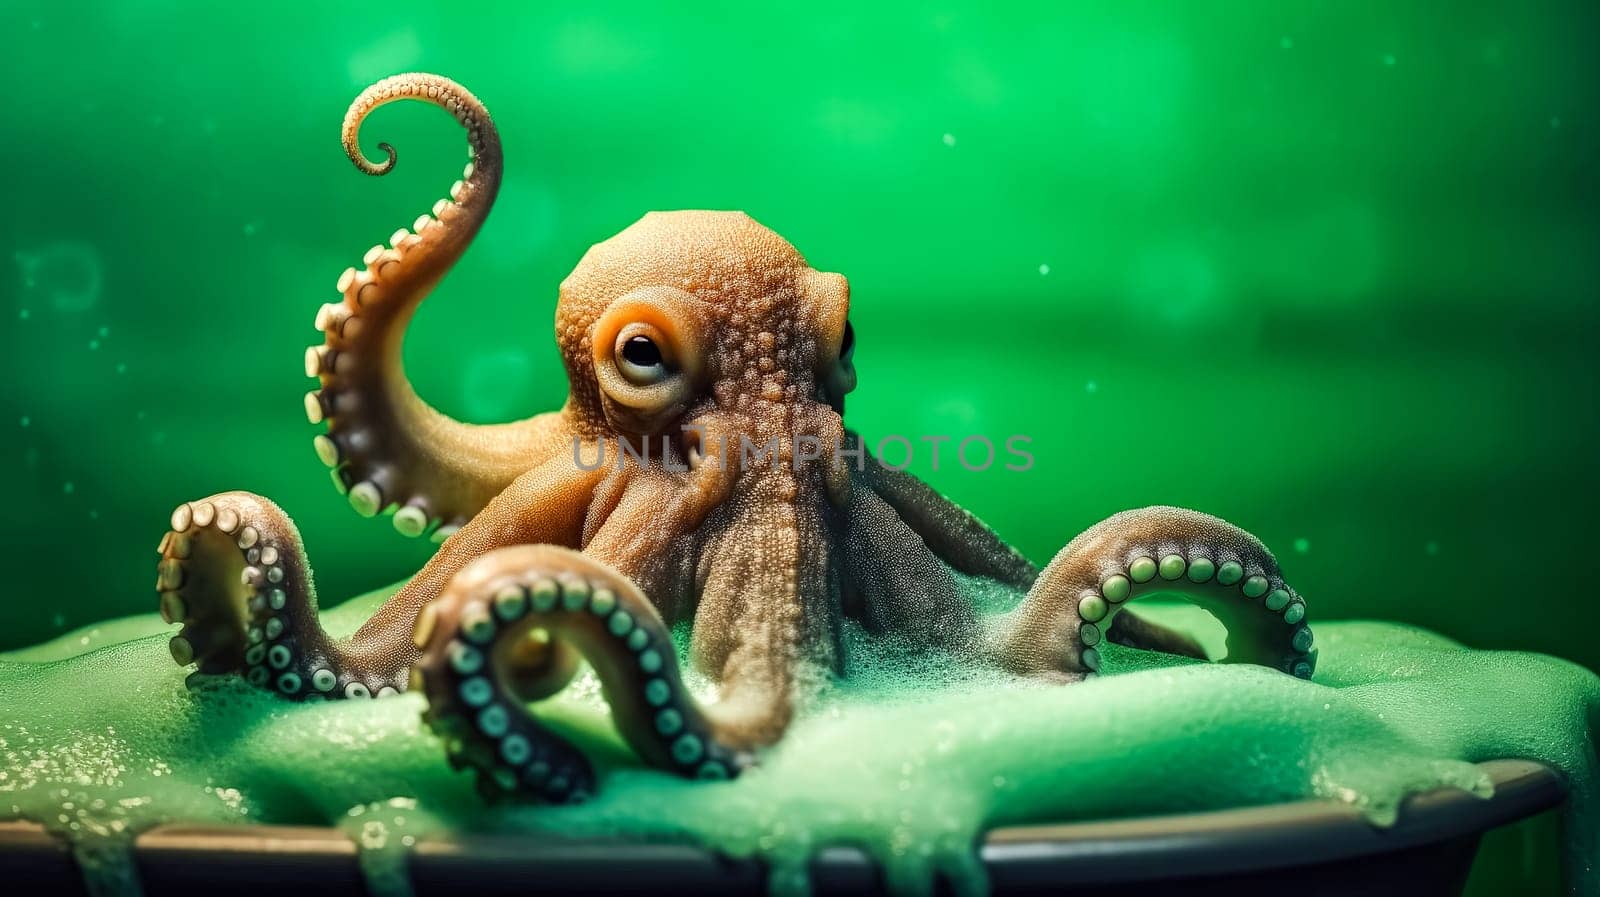 A charming small octopus enjoys a bubble bath by Alla_Morozova93